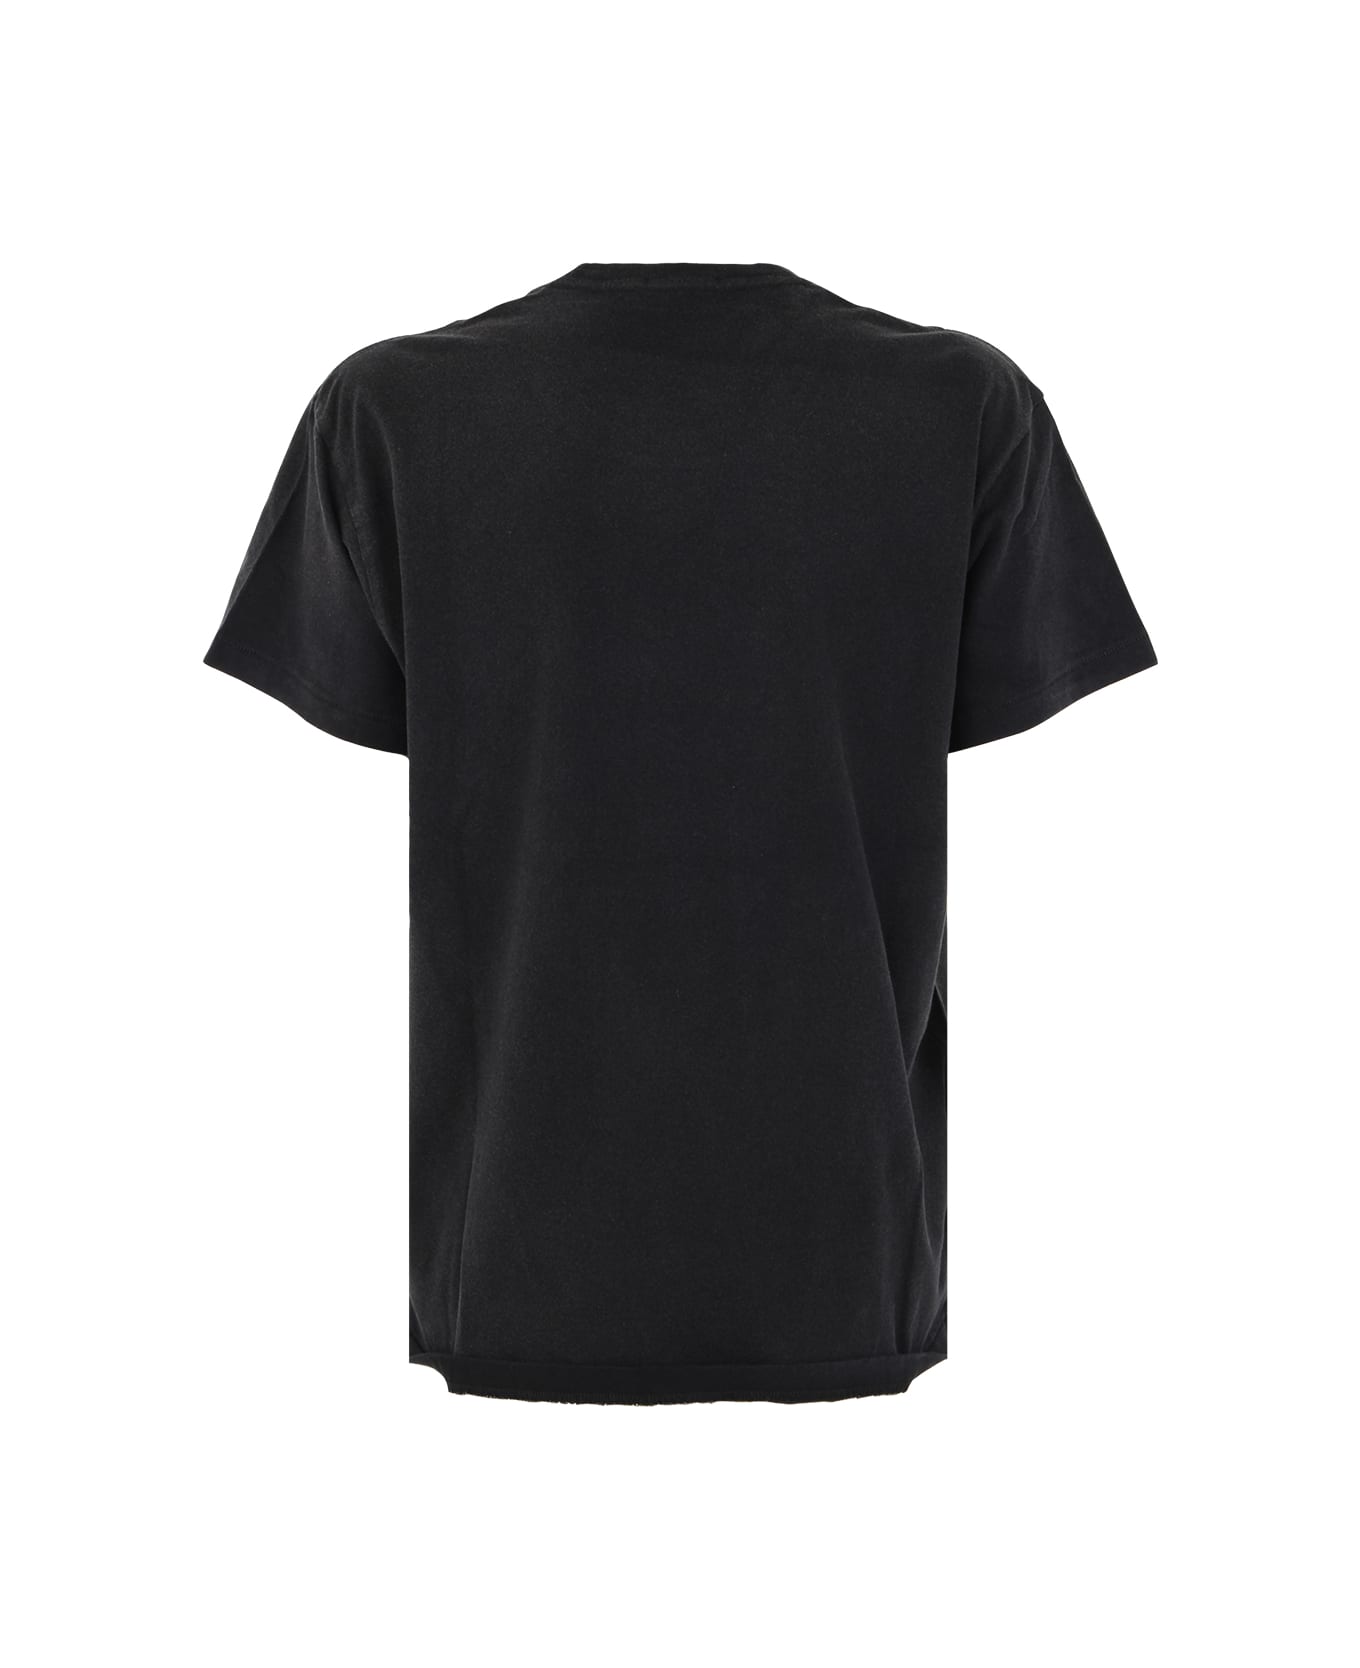 R13 New York Boy T-shirt - A Black